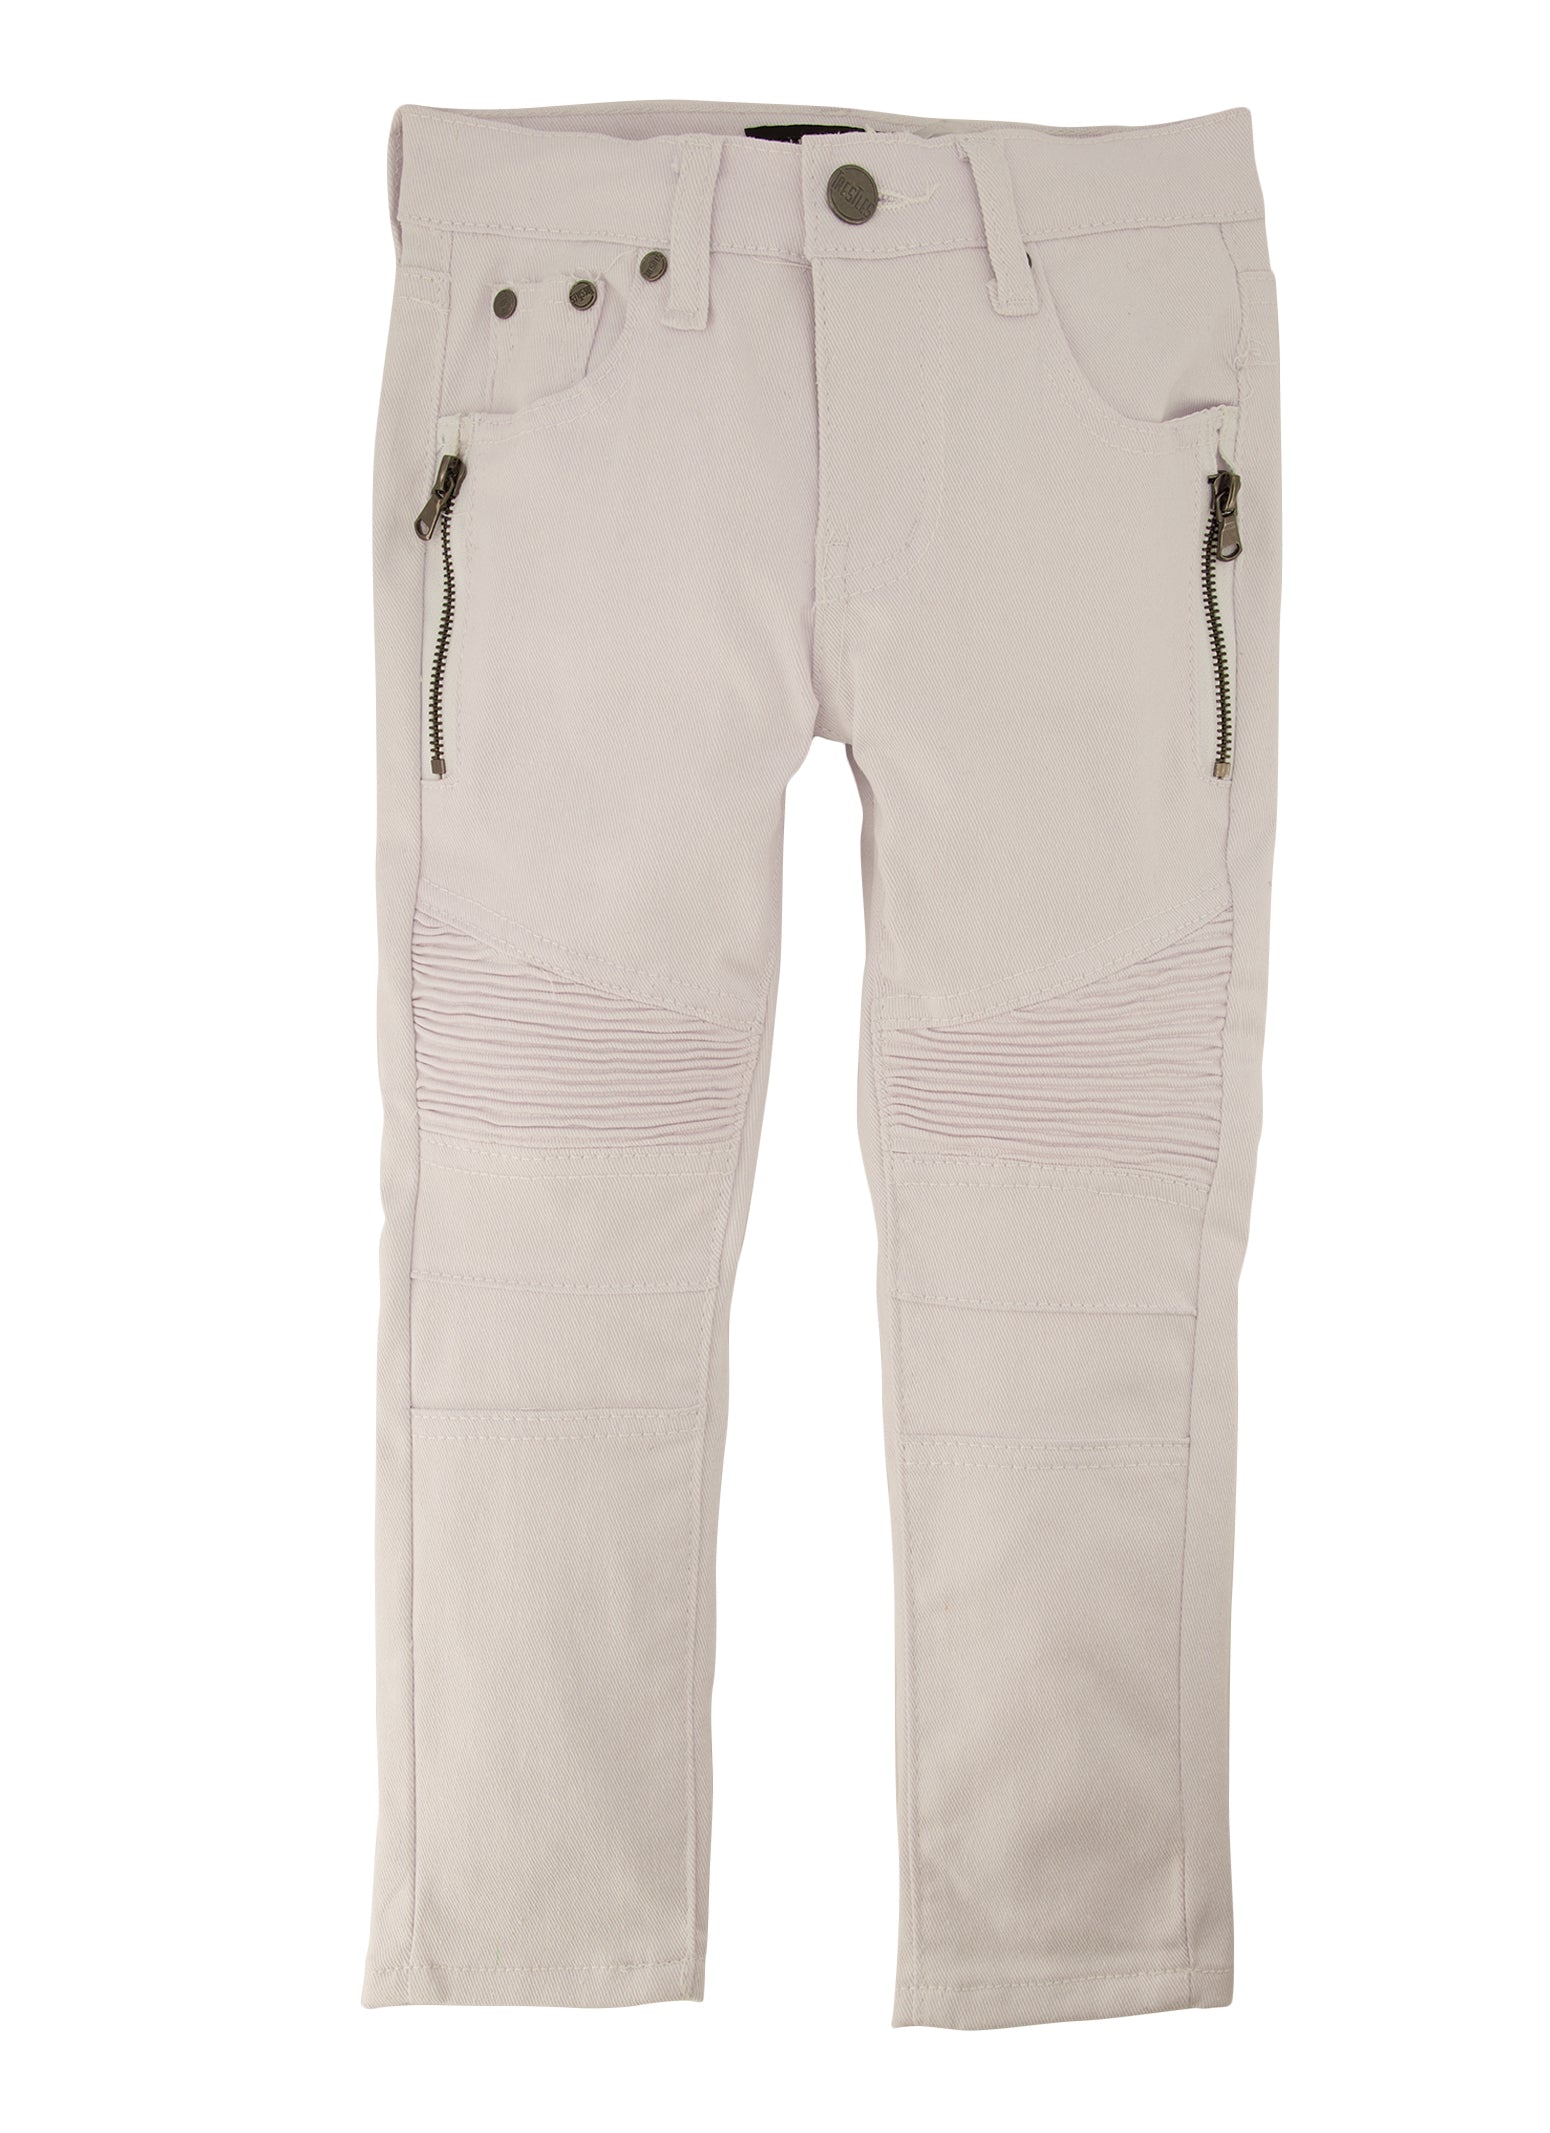 Little Boys Zip Pocket Moto Jeans, White, Size 7